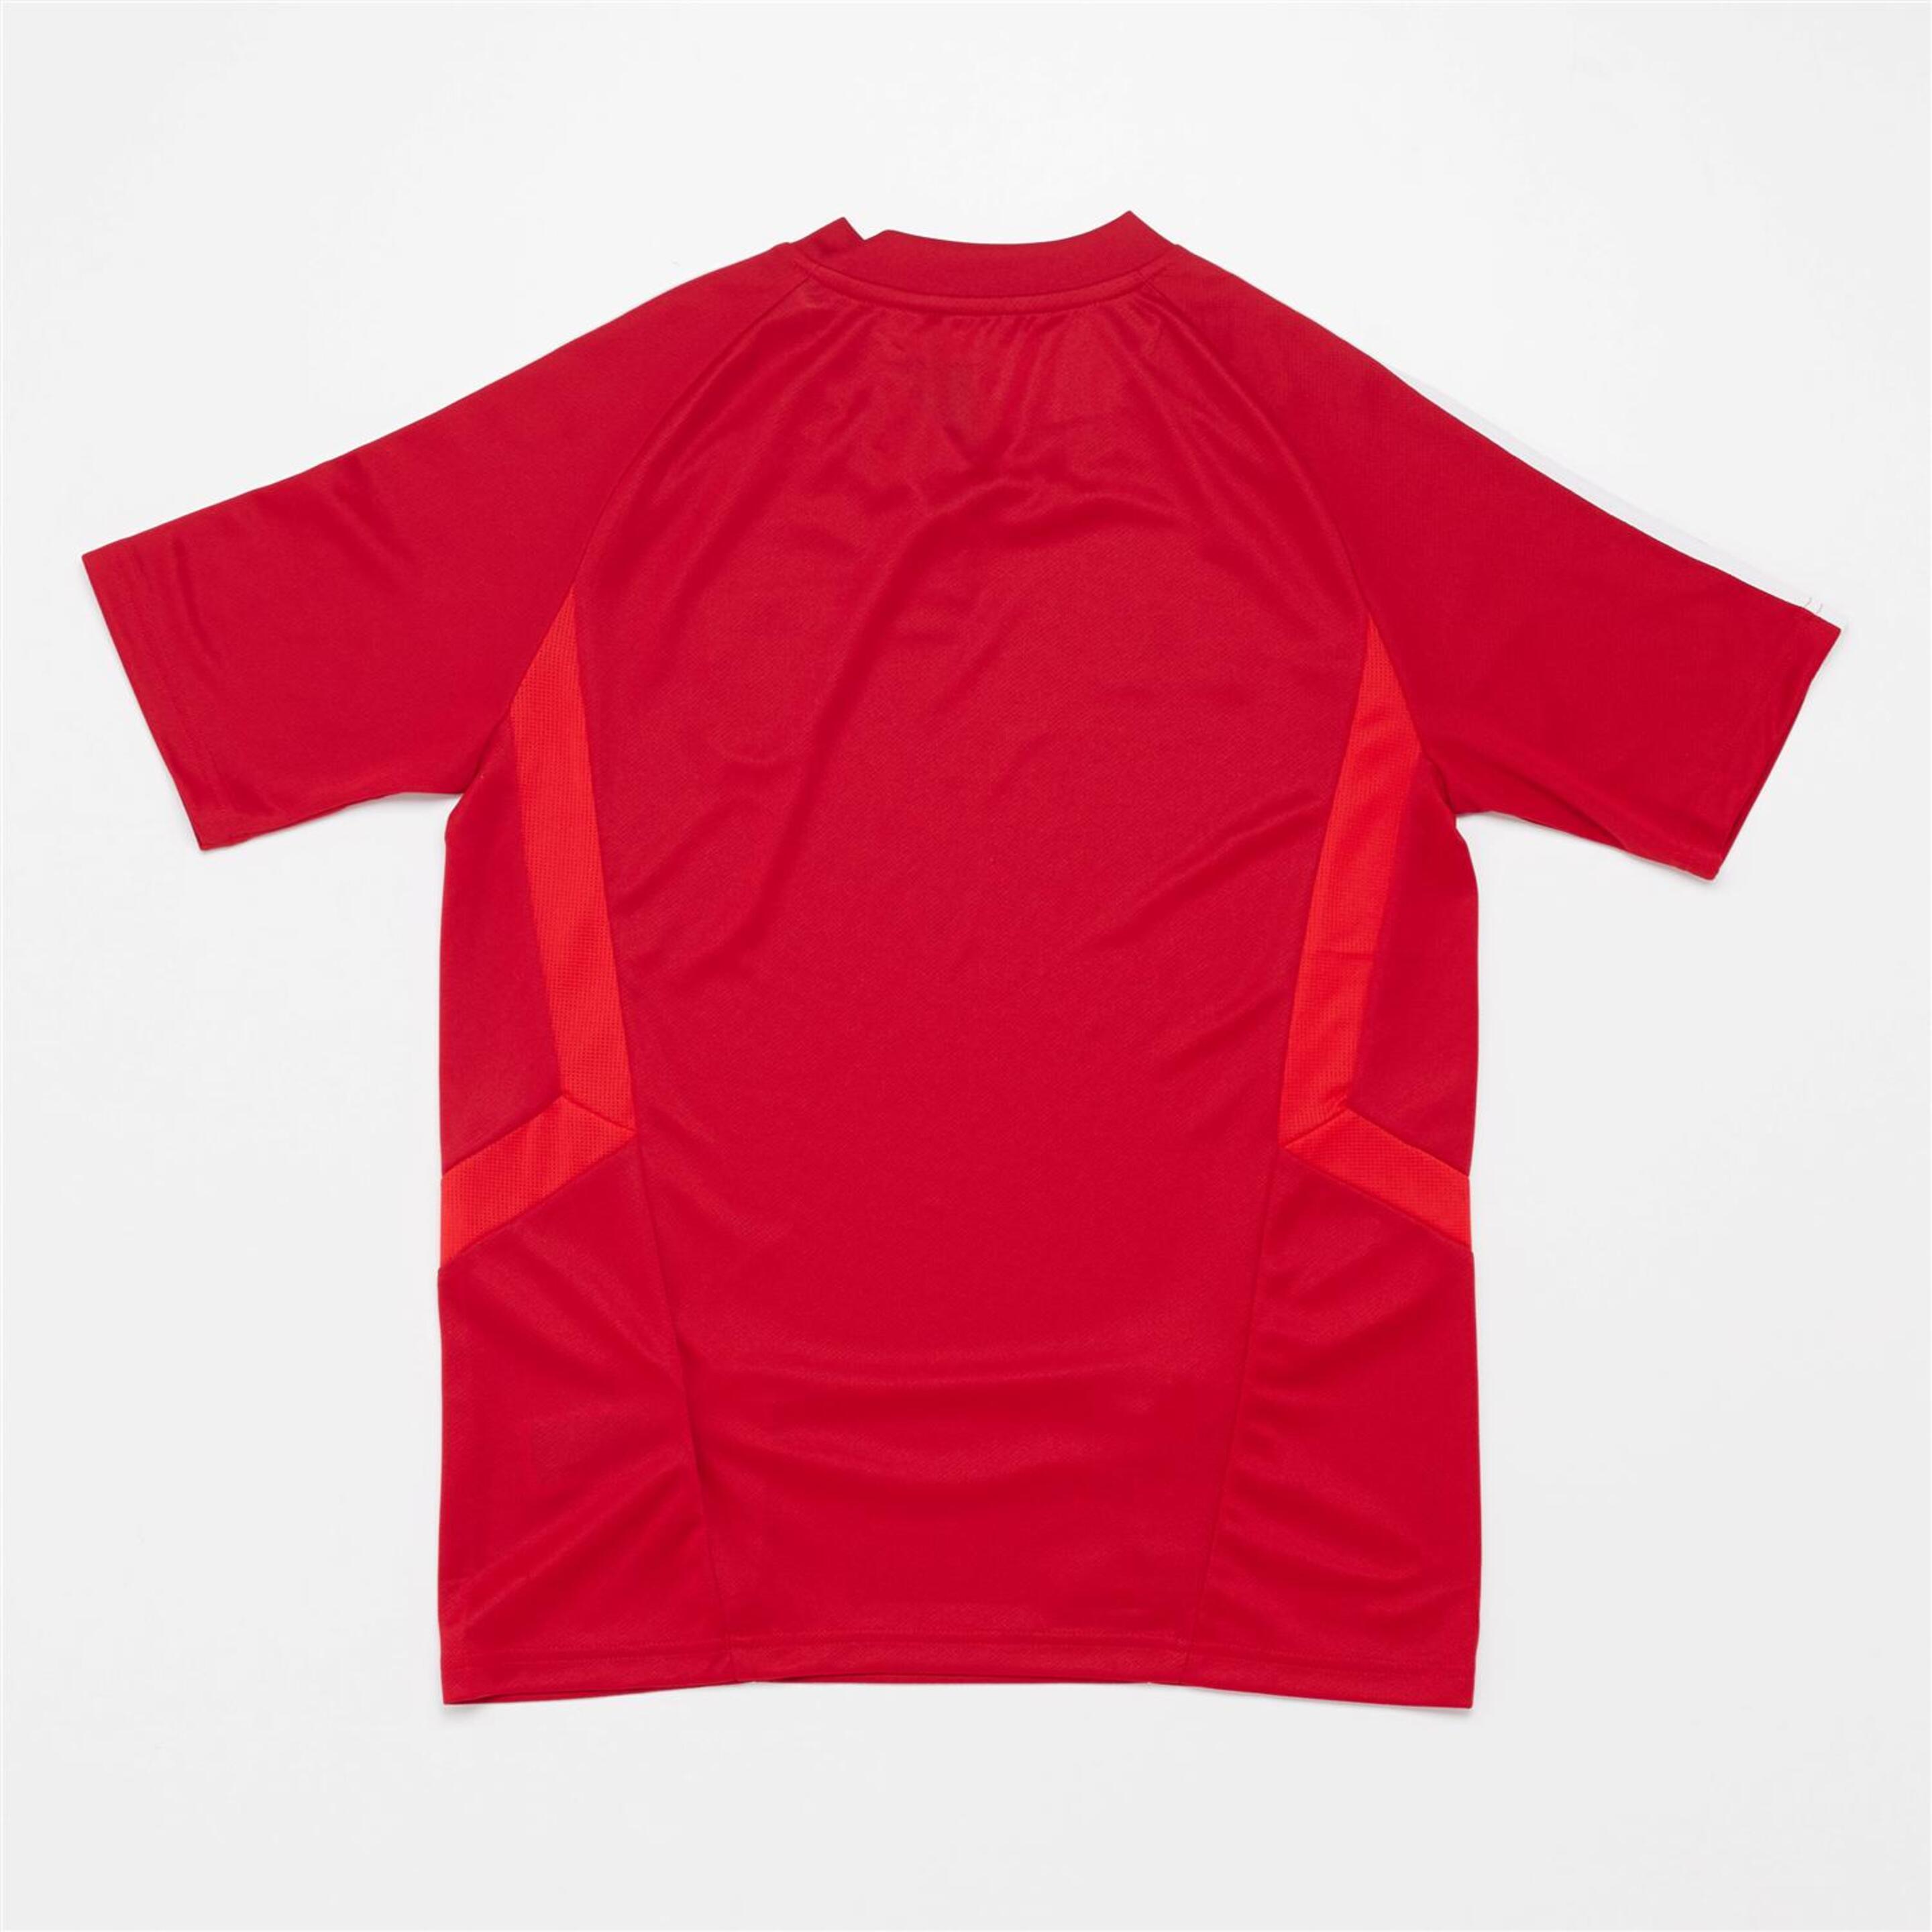 Camiseta Benfica Cf adidas